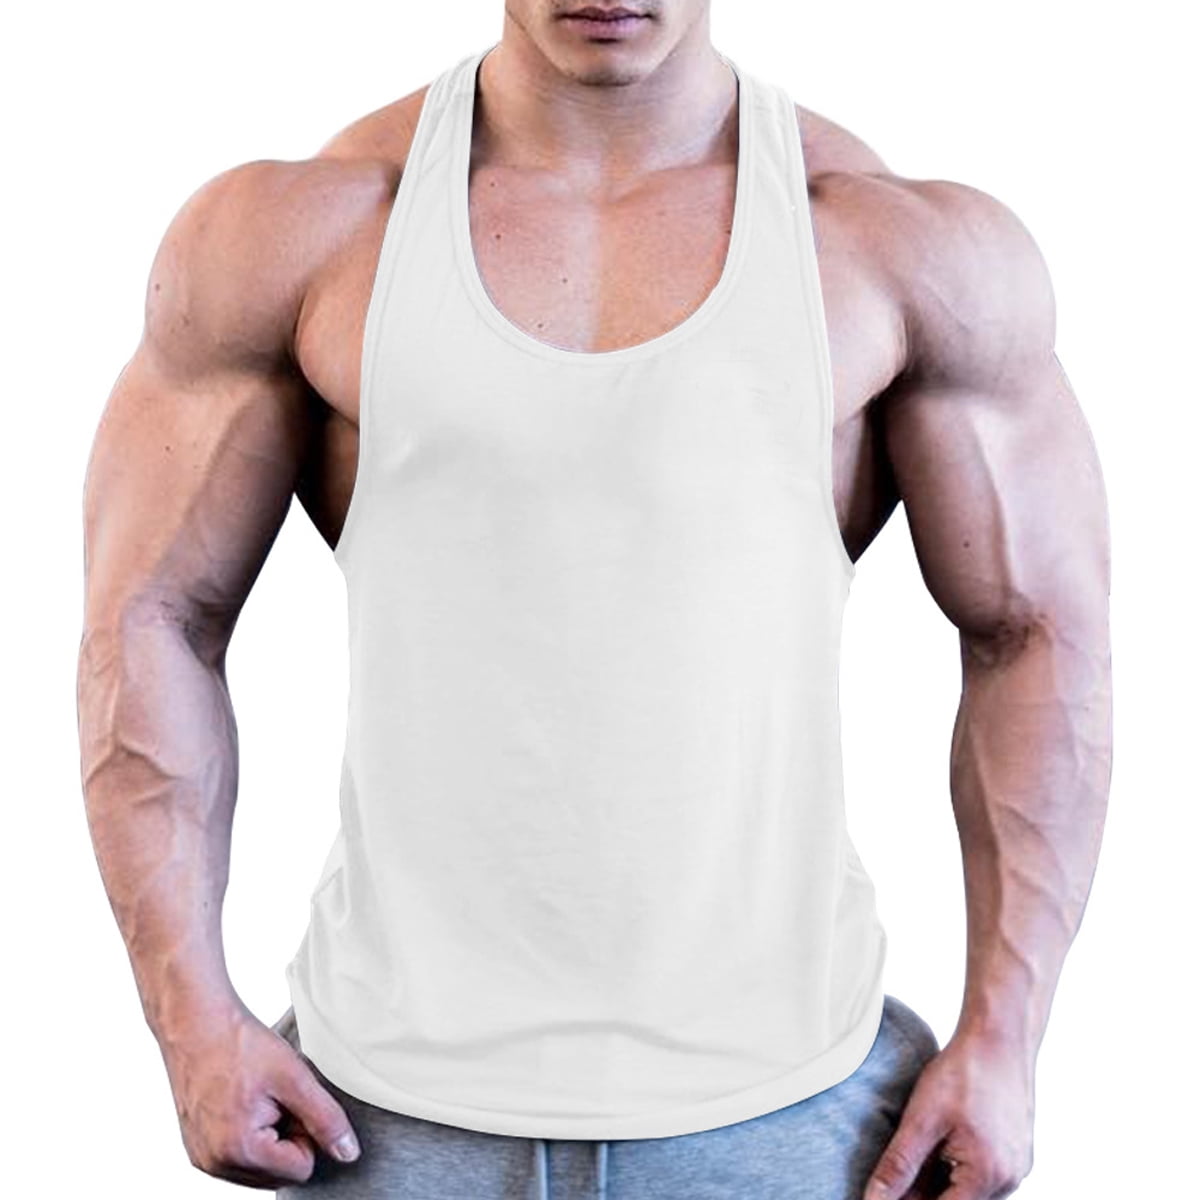 Corex Fitness Stringer Mens Gym Vest Blue Graphic Athletic Fit Workout Tank Top 